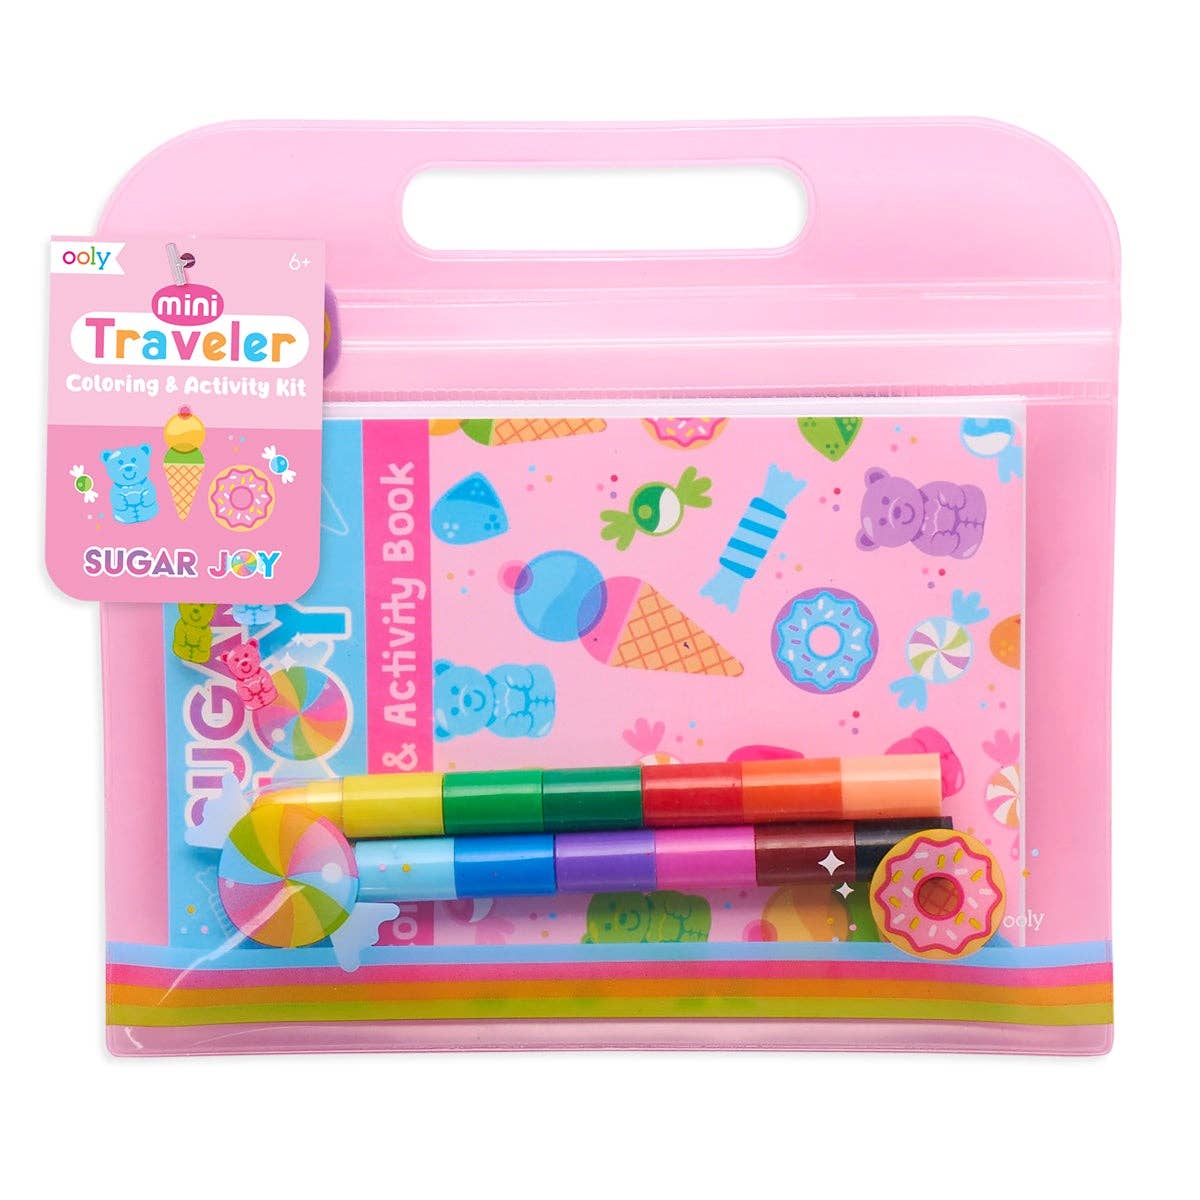 Mini Traveler Coloring & Activity Kits